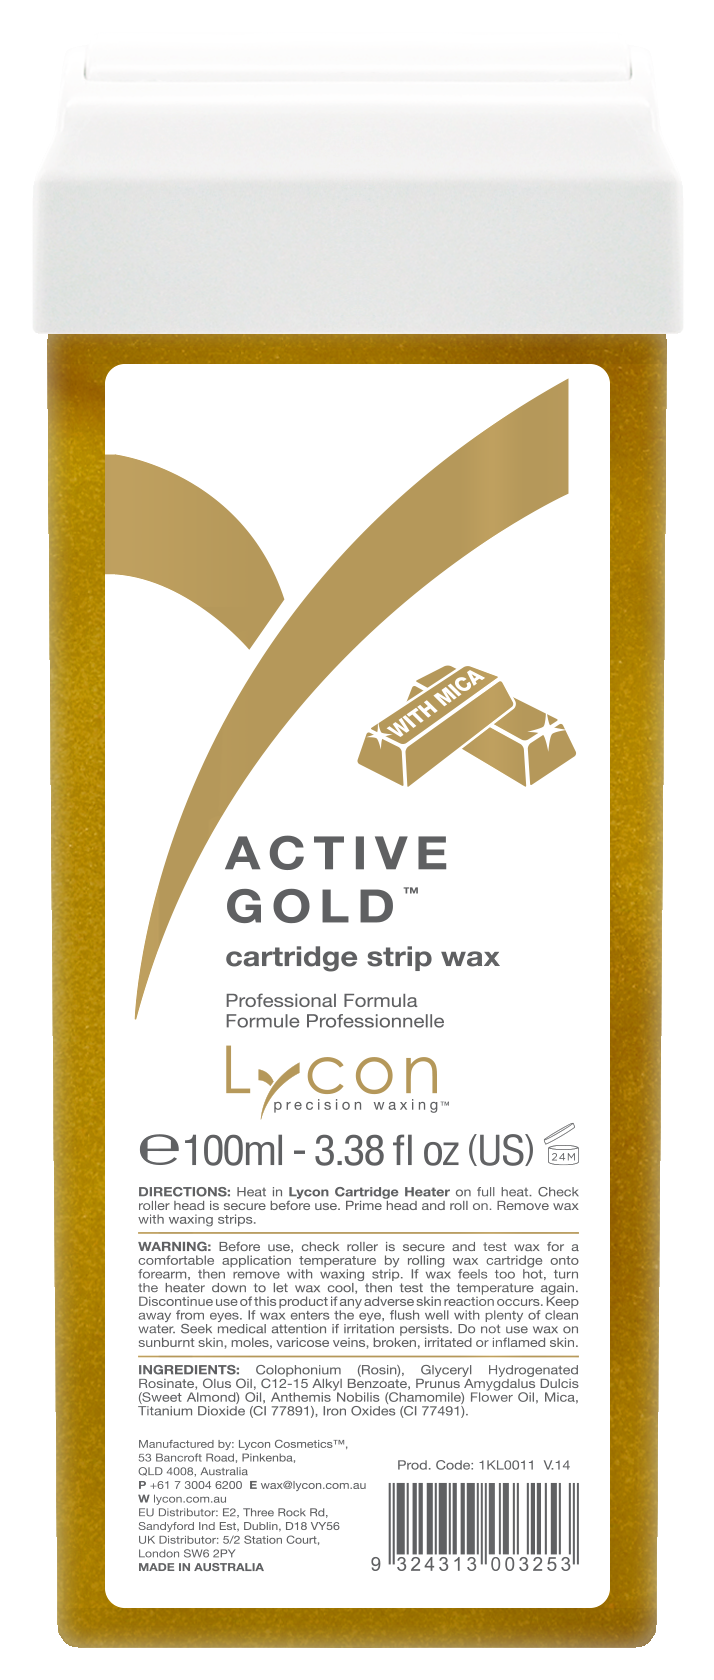 ACTIVE GOLD CARTRIDGE STRIP WAX 100 ml